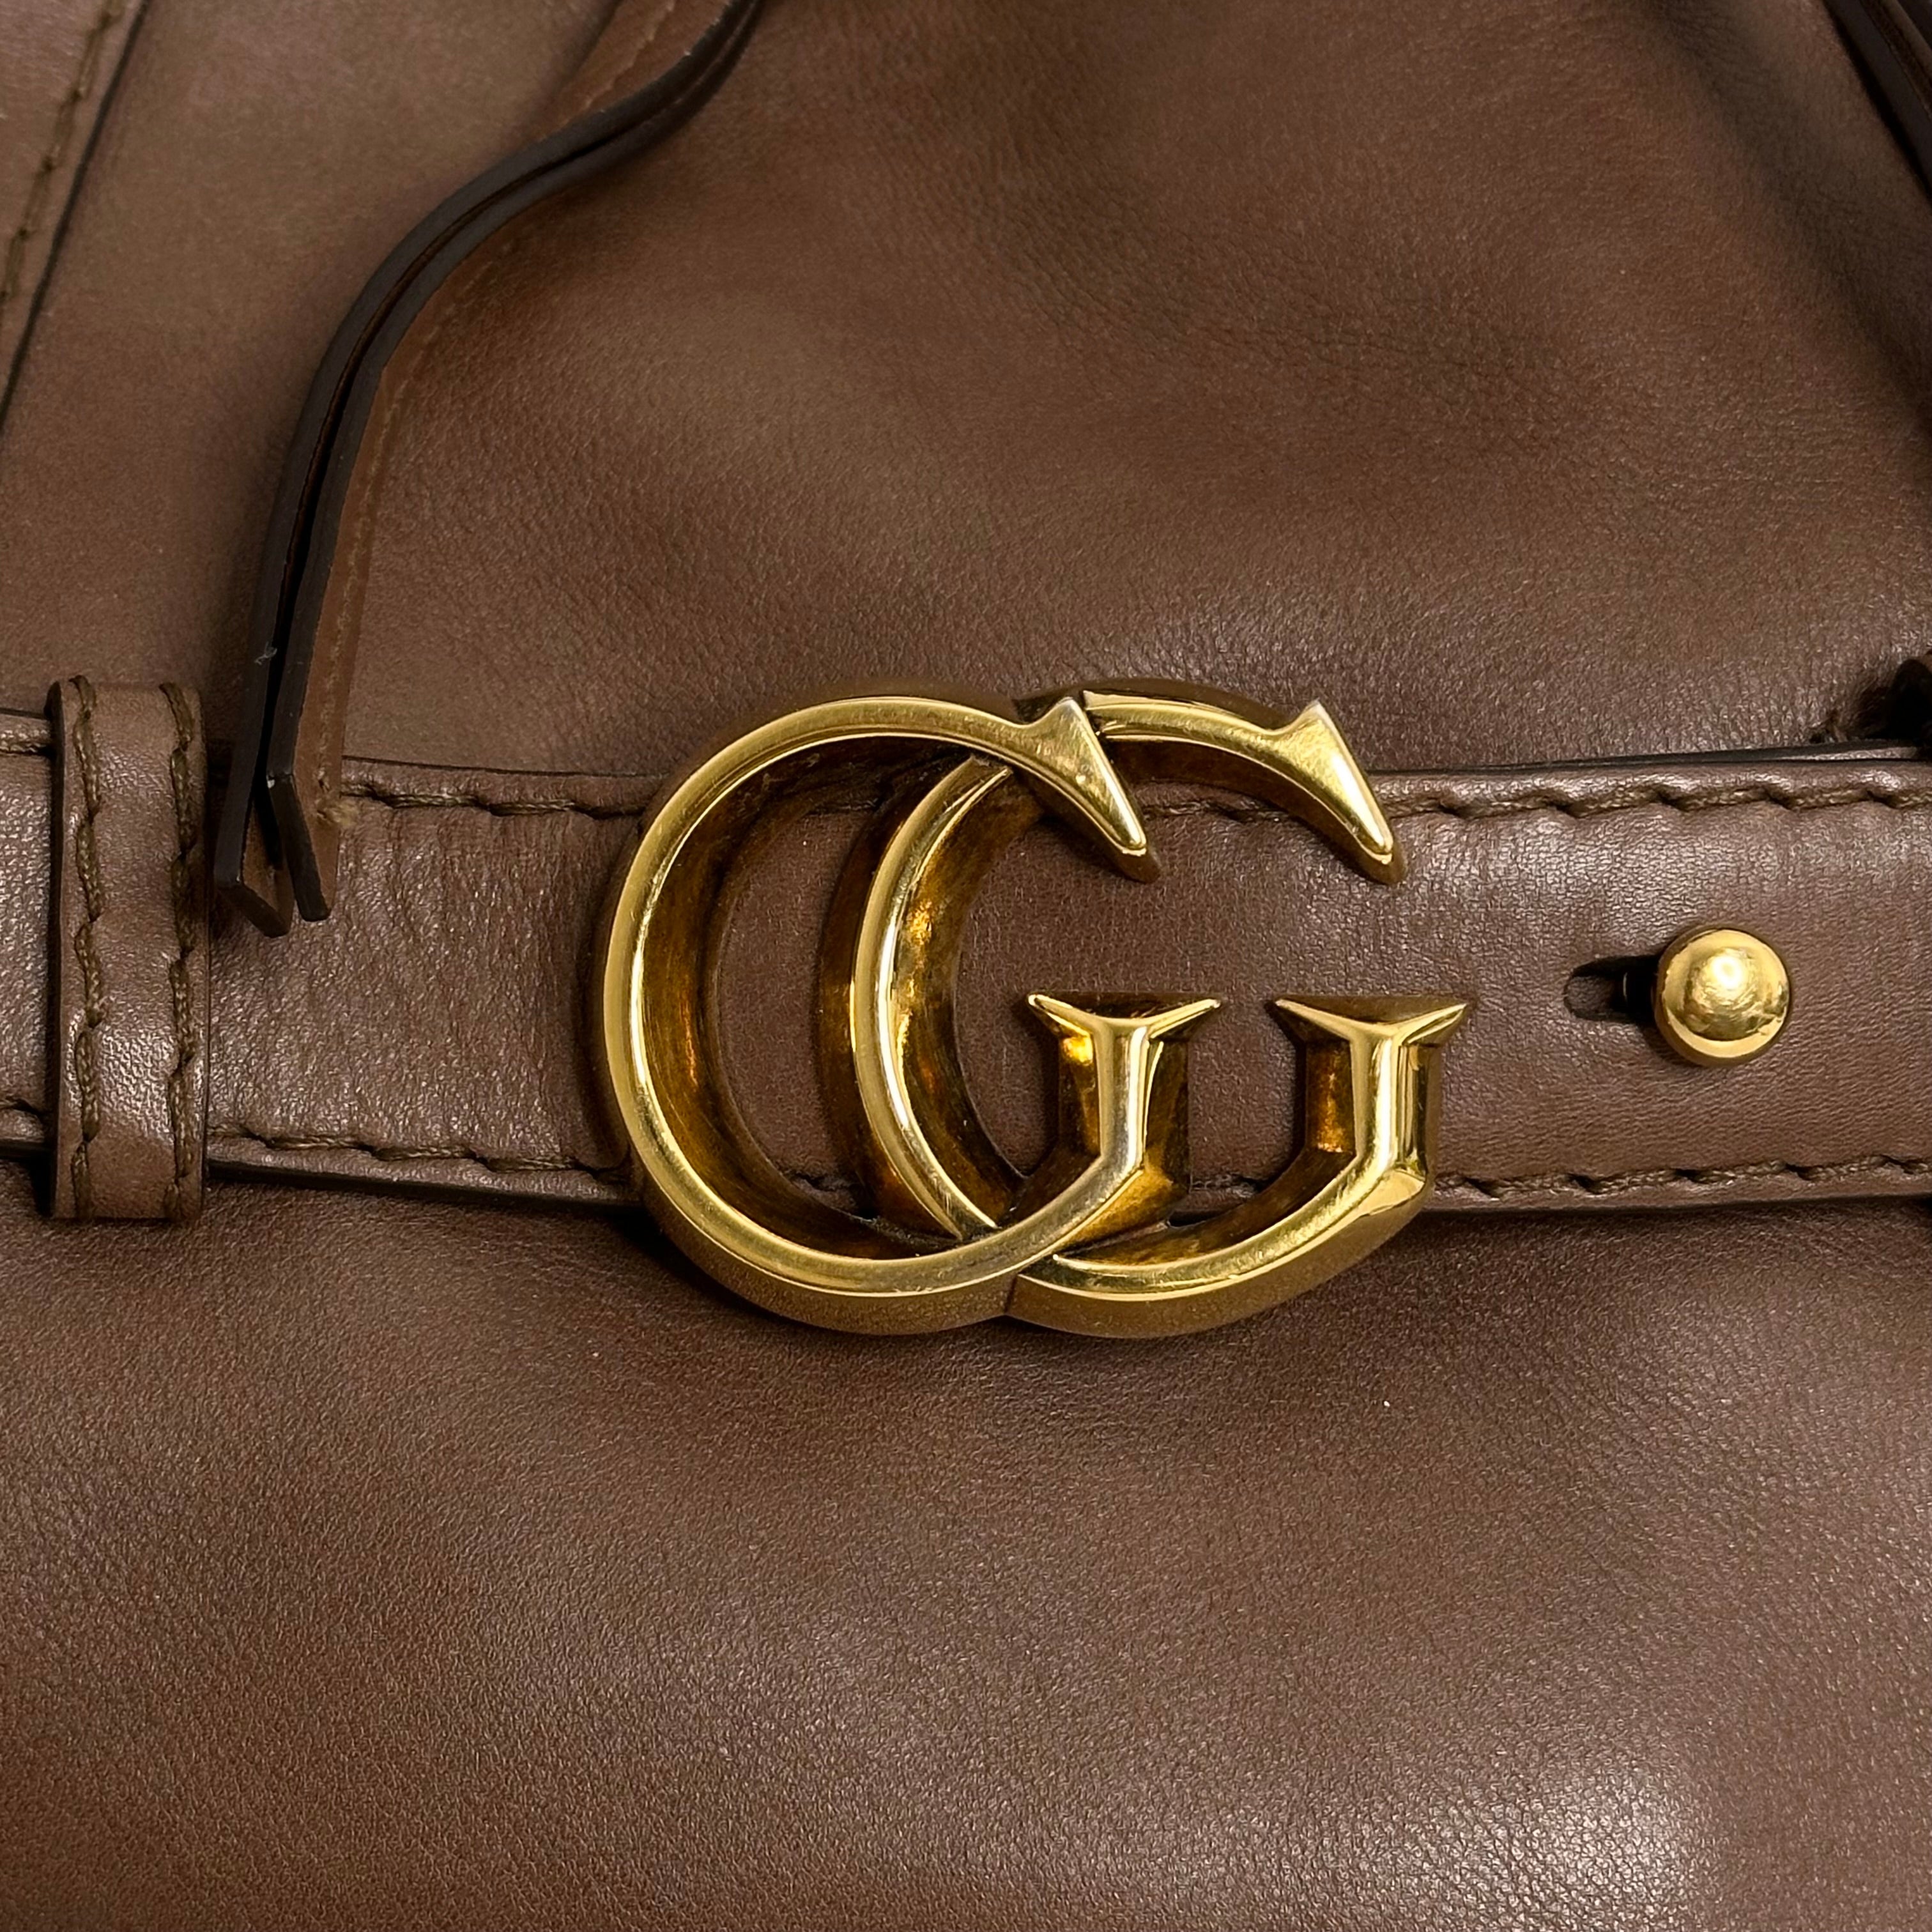 GG Leather Bag